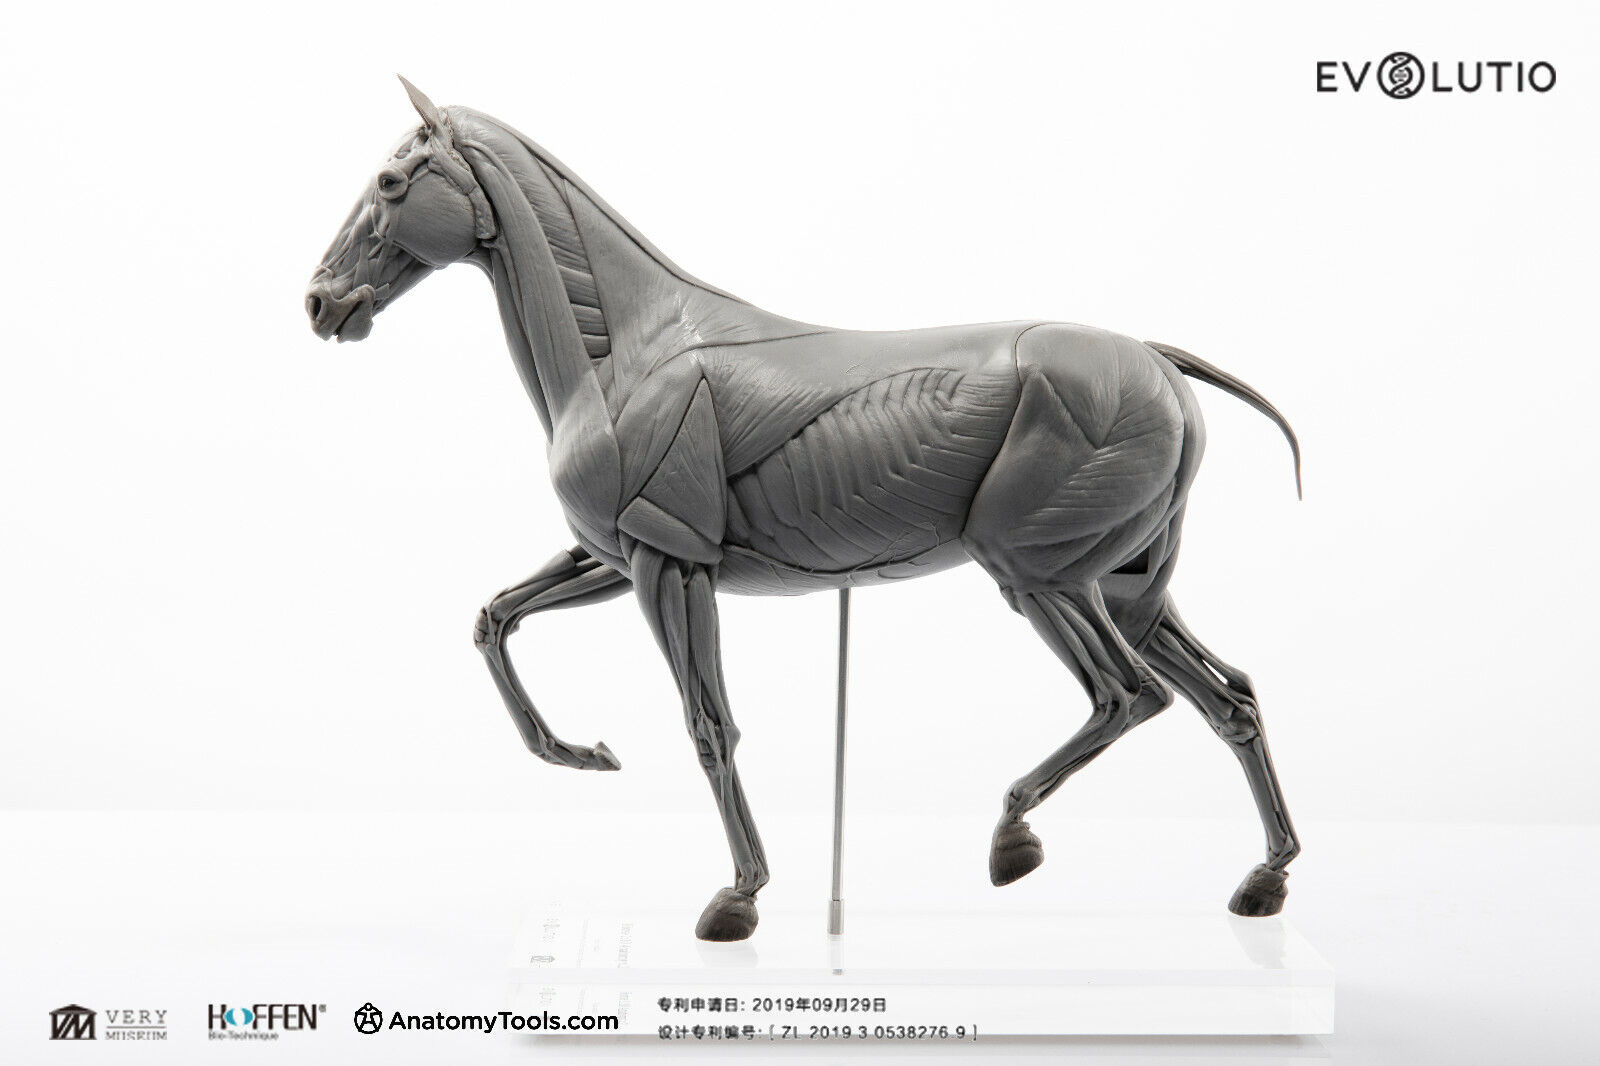 EVOLUTIO - 1/10 HORSE ANATOMY PVC basic - 10.3 x 2.76 x 8.66 in